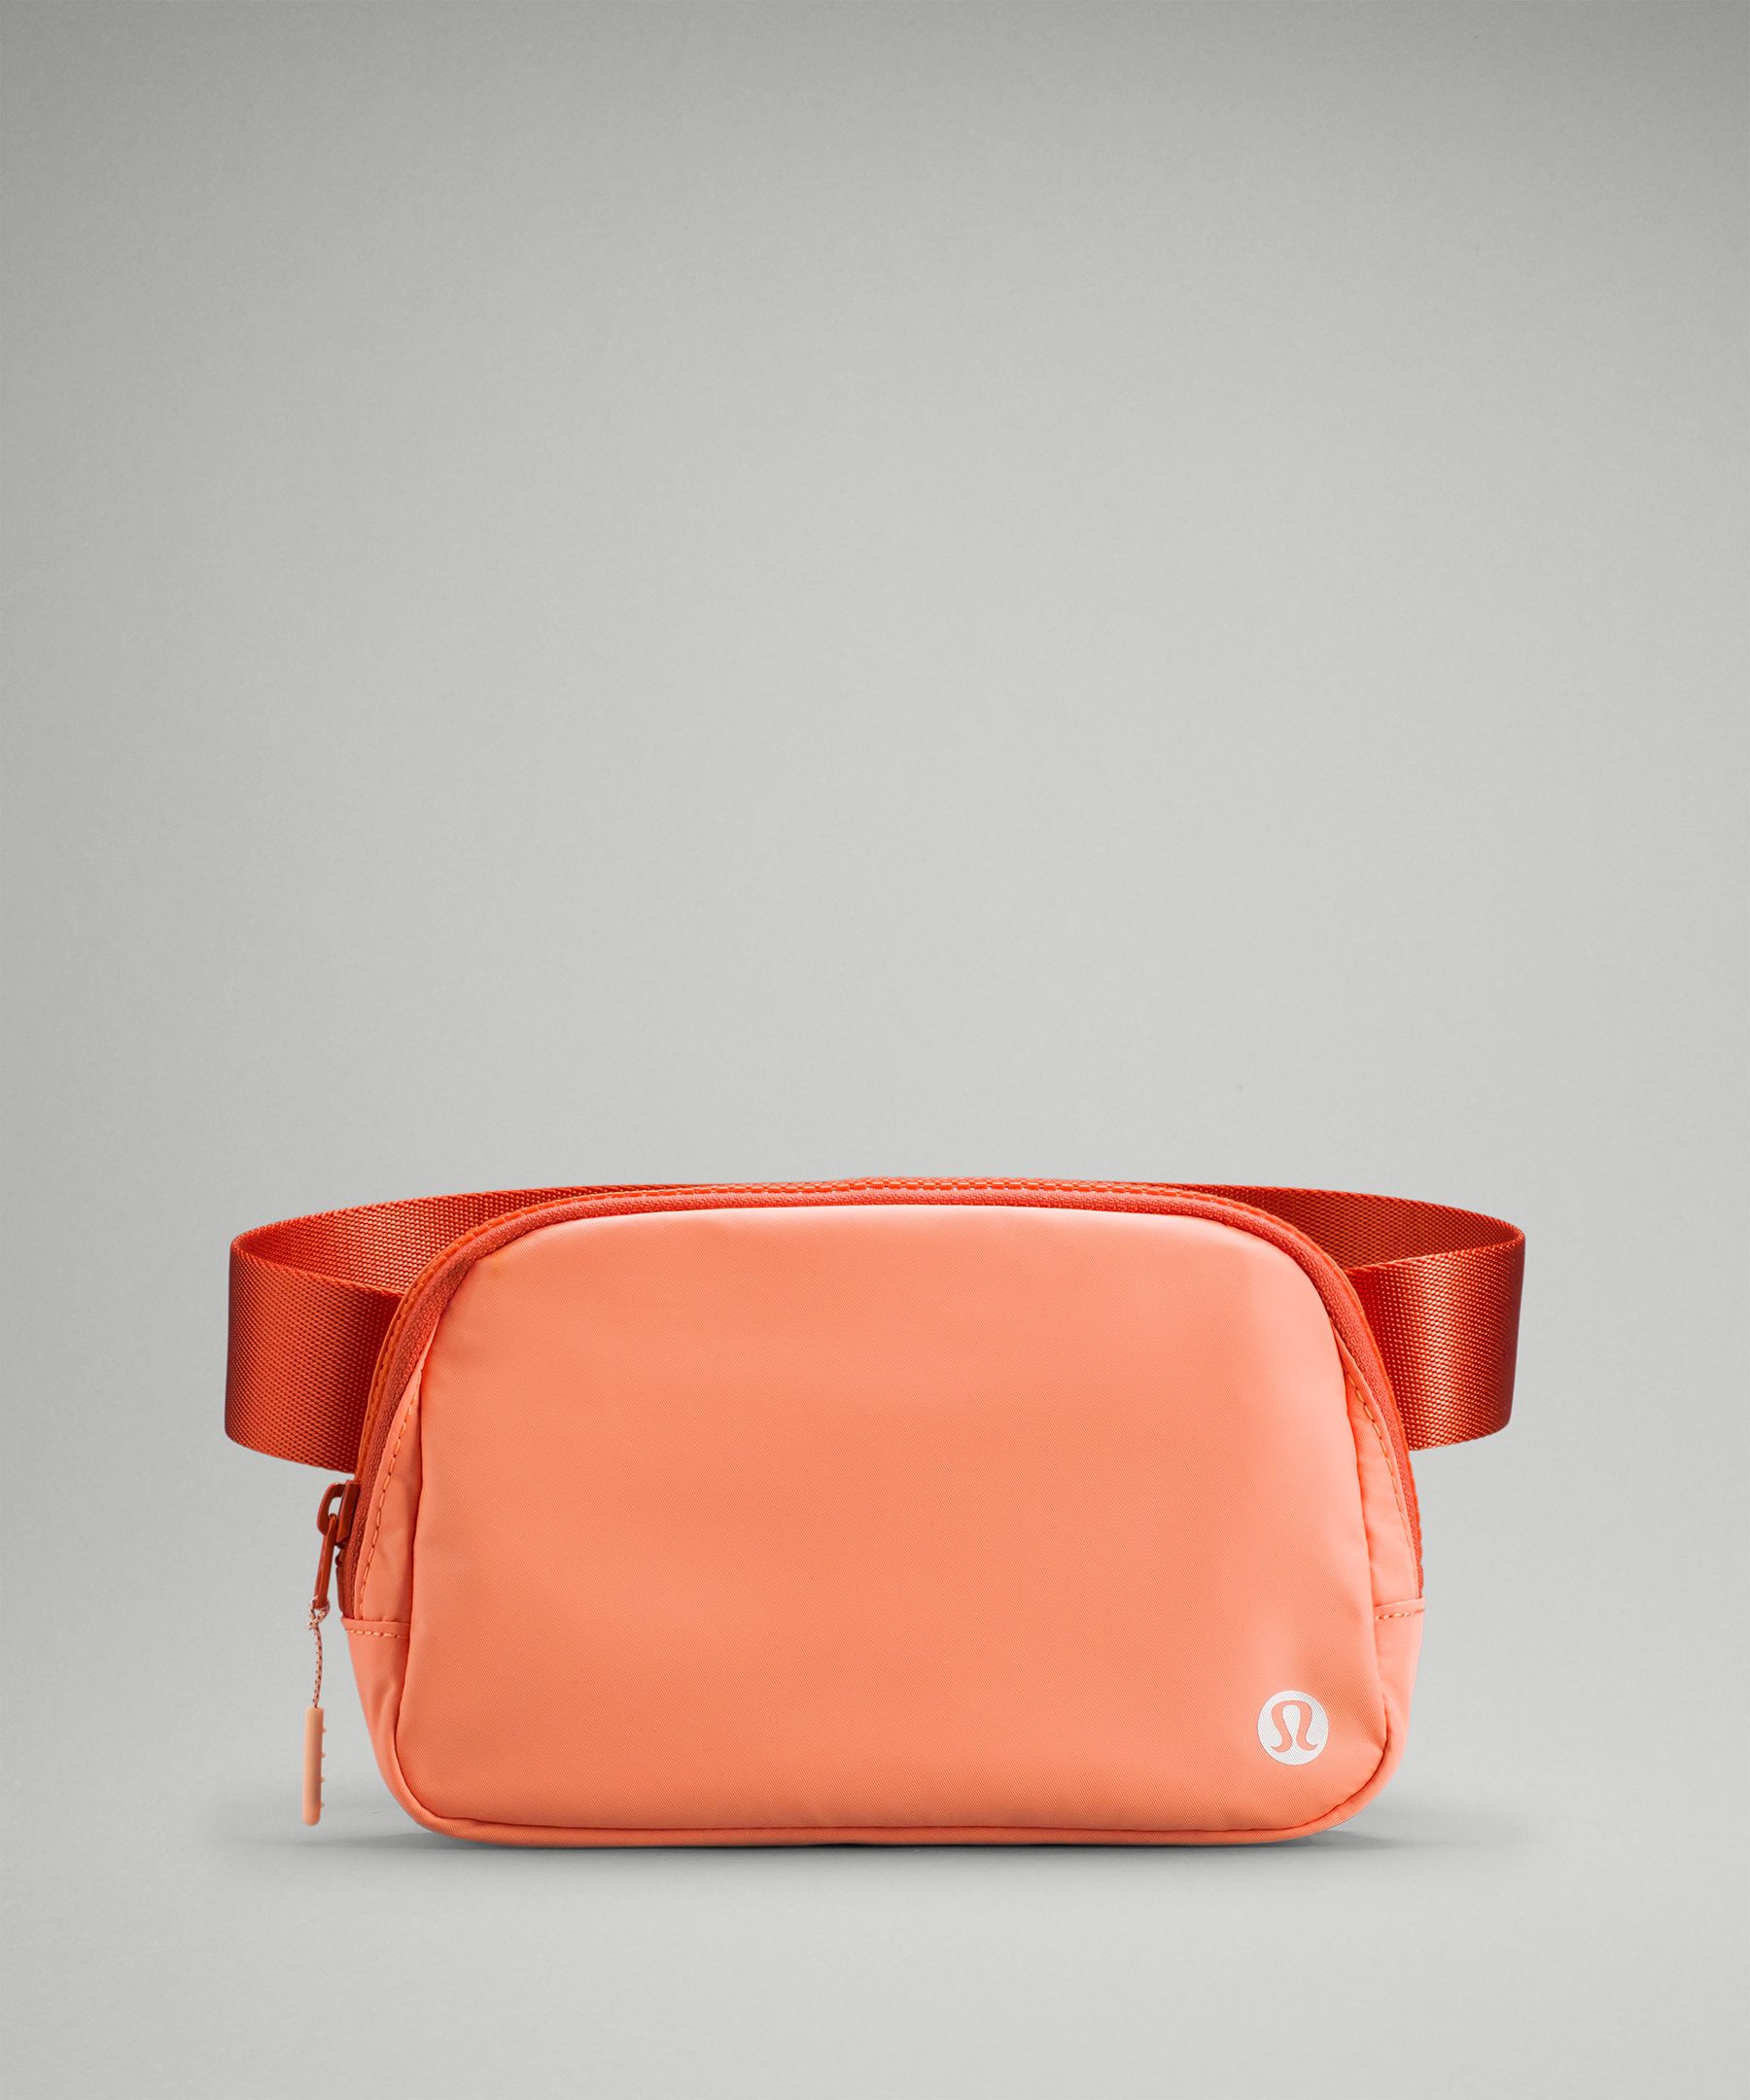 Lululemon Everywhere Belt Bag In Golden Apricot/warm Coral